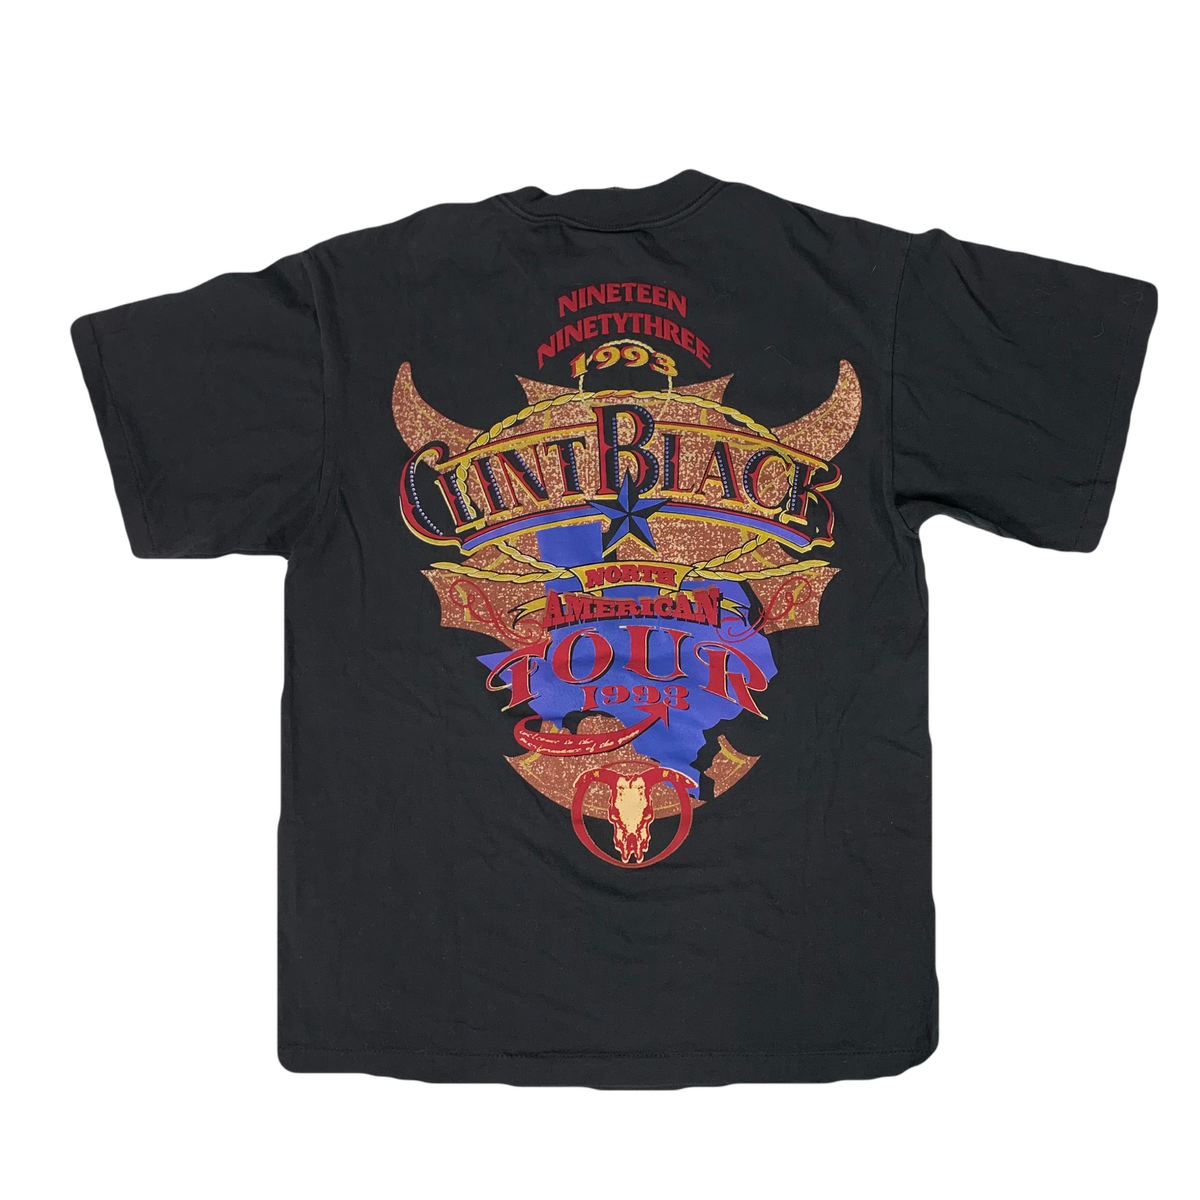 Vintage Clint Black “North American” Tour T-Shirt